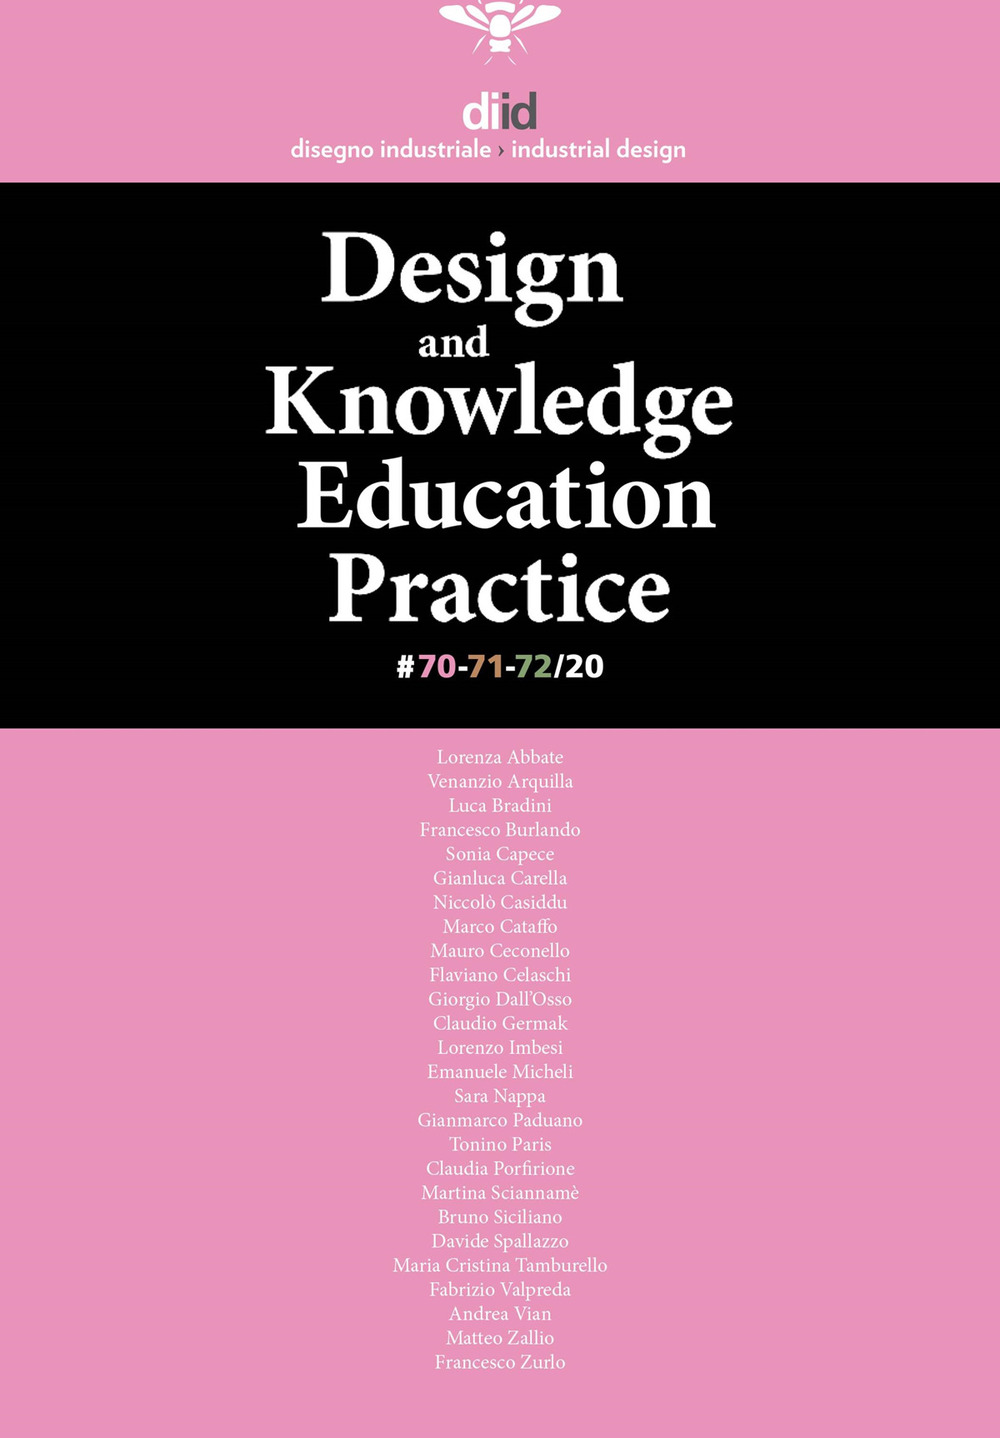 Diid disegno industriale. Ediz. inglese. Vol. 70-71-72: Design 2030: knowled education practice